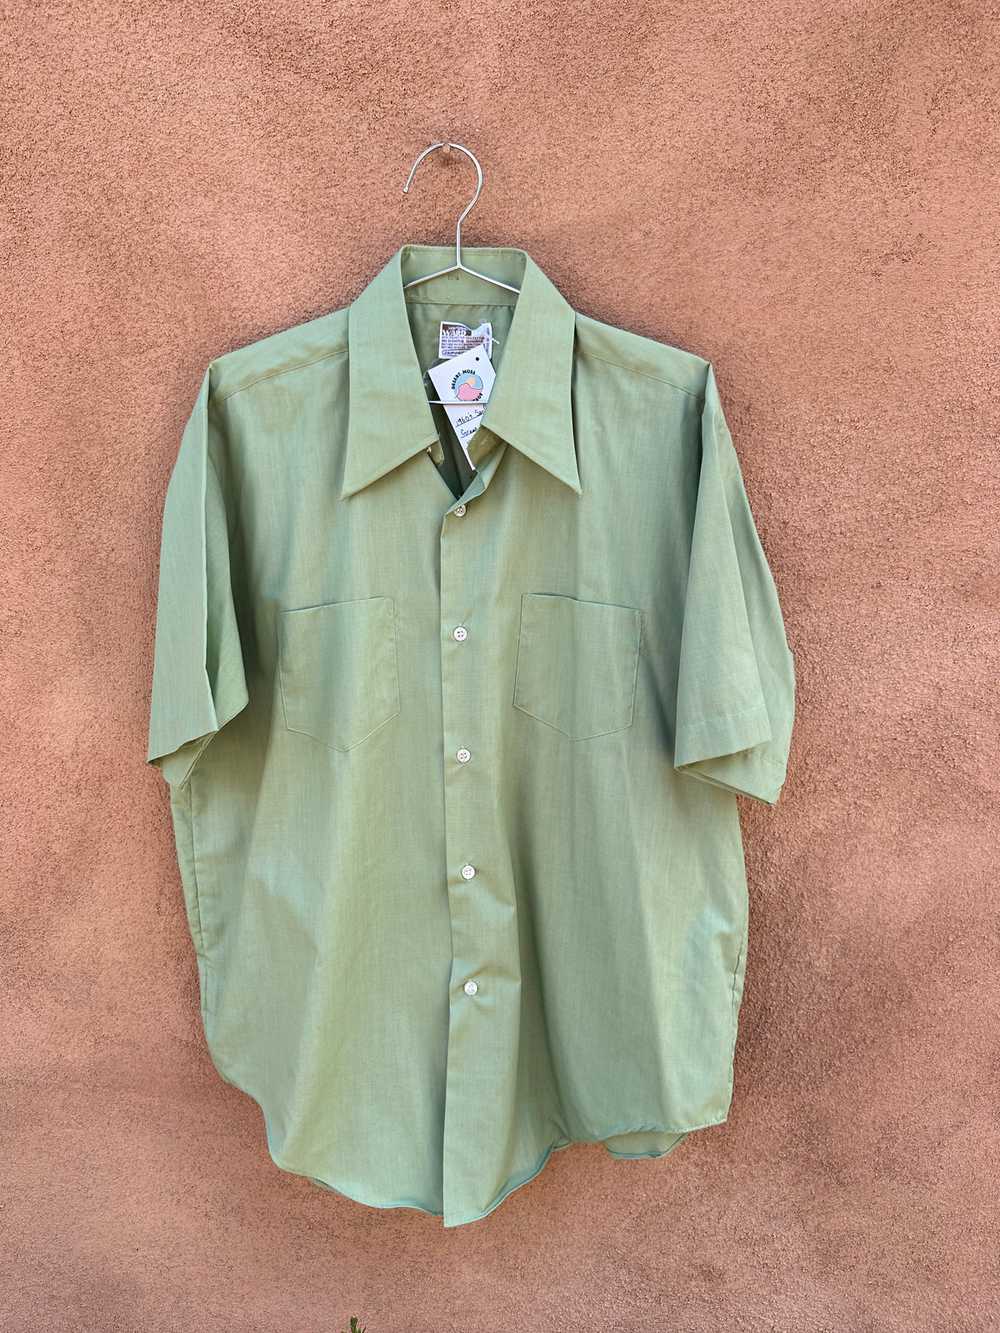 1960's Sanforized Green Montgomery Ward Shirt - image 1